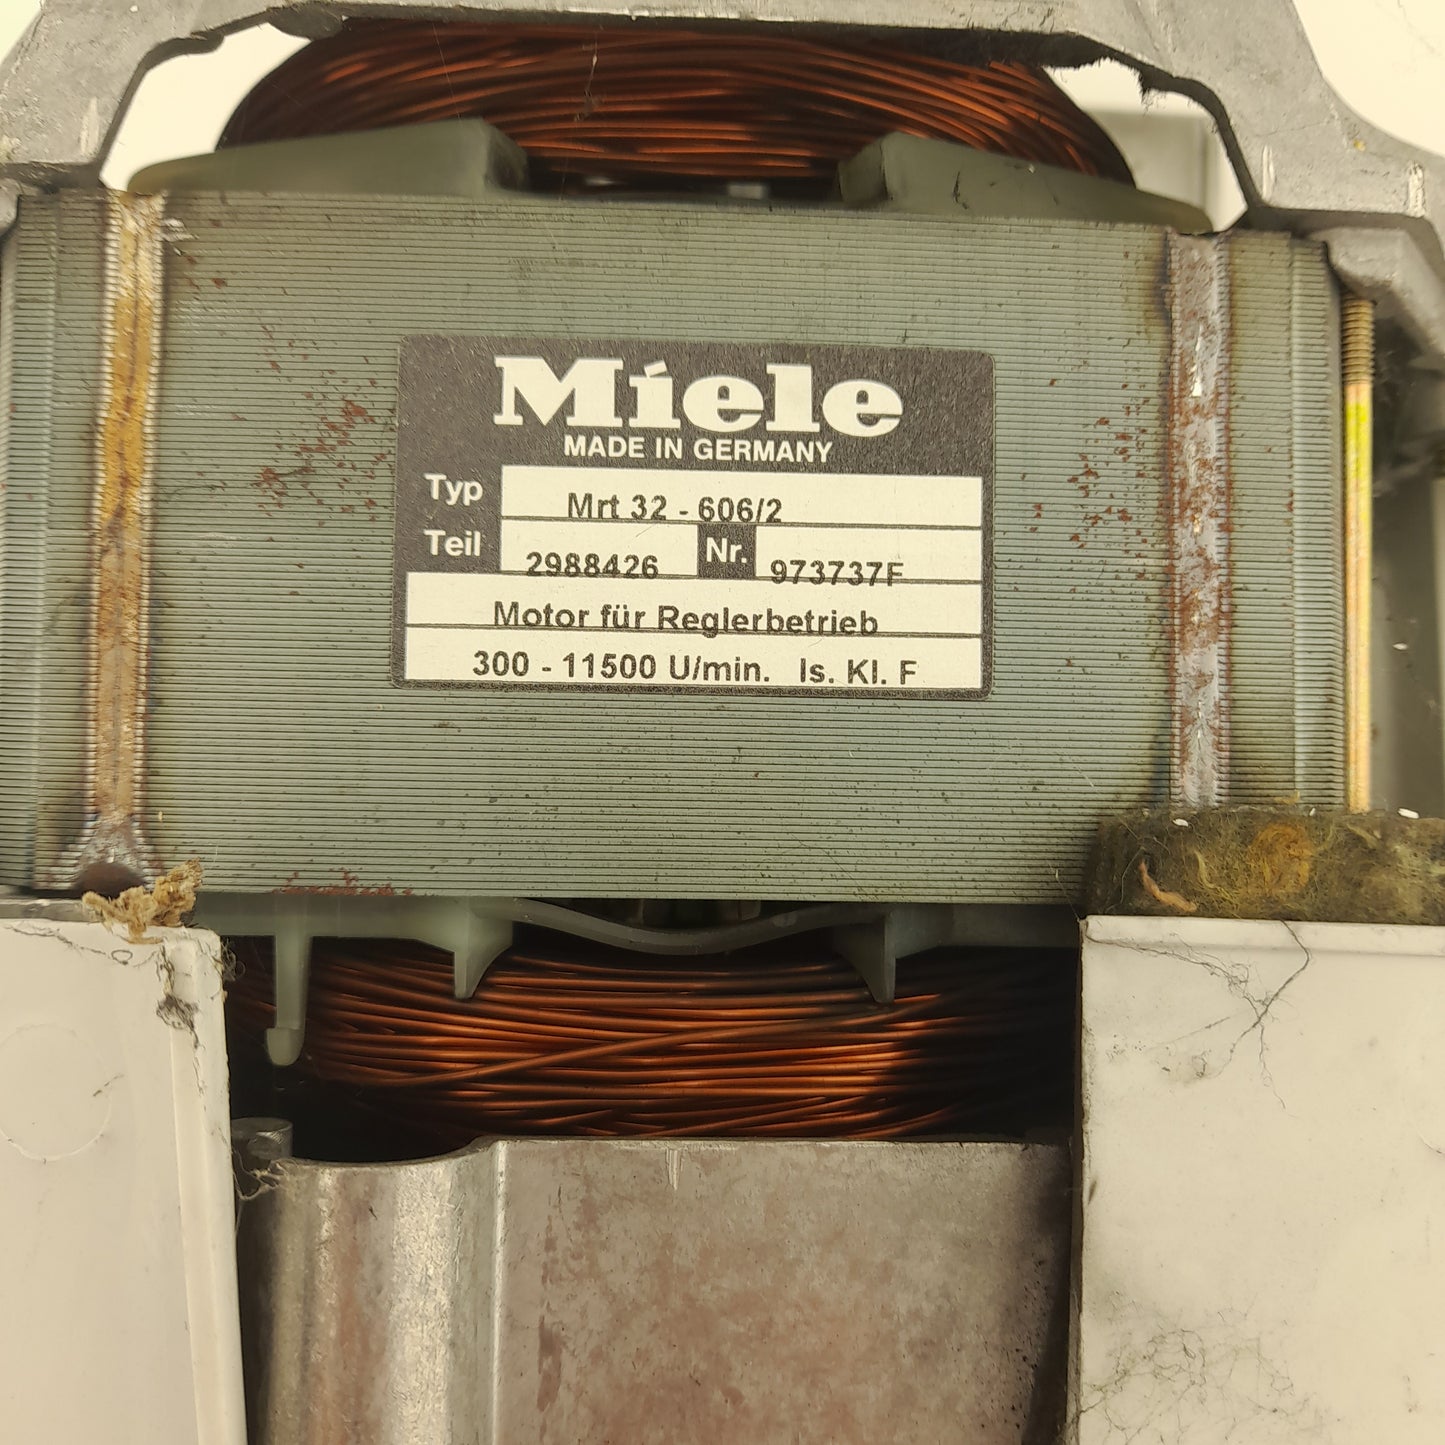 Miele Washing Machine Motor 2988426 973737F Type Mrt 32-606/2